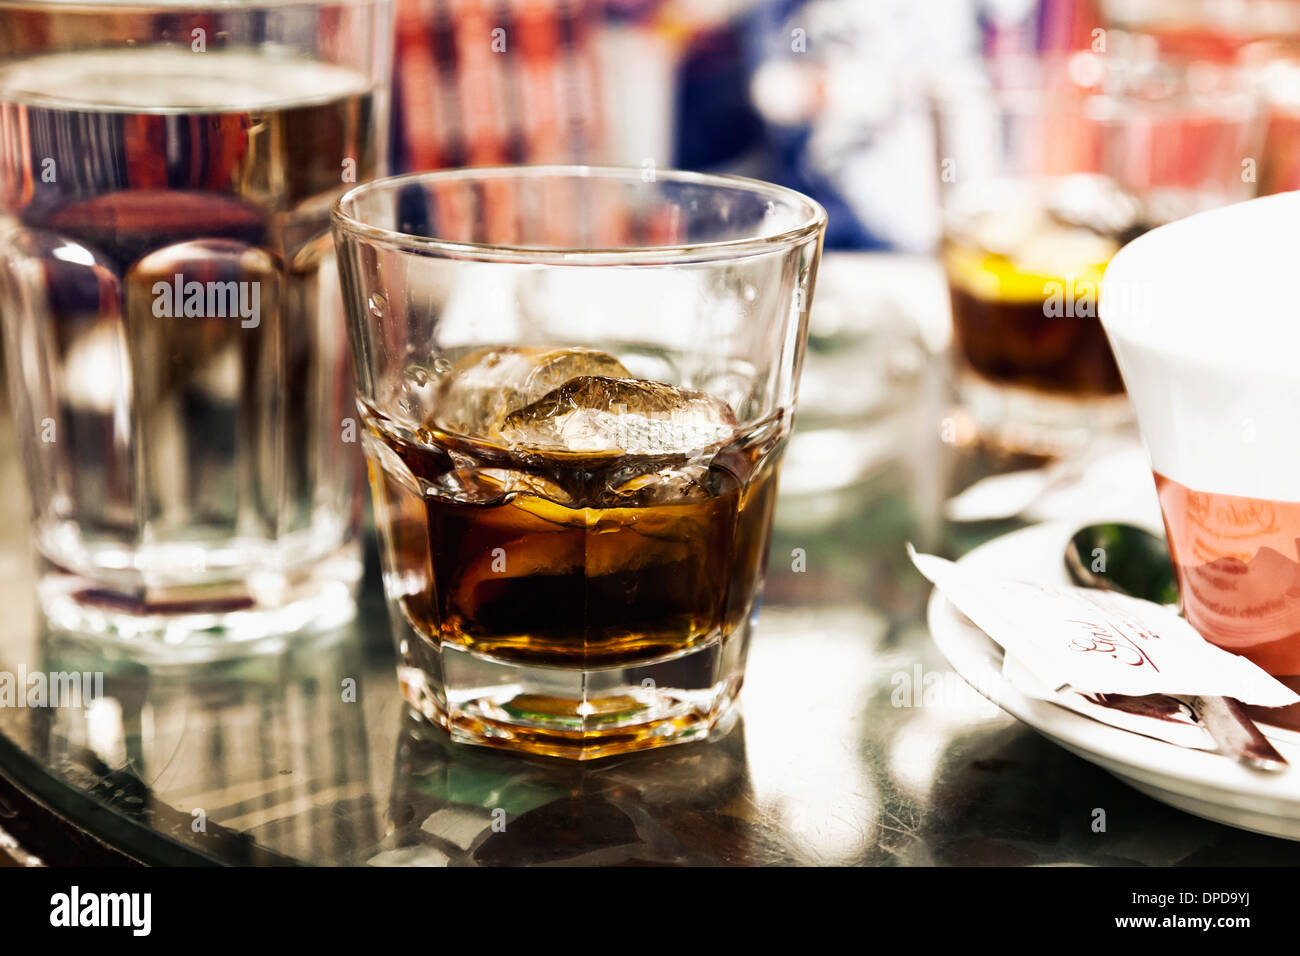 Croatia, Zadar, Beverages on table in coffee bar Stock Photo